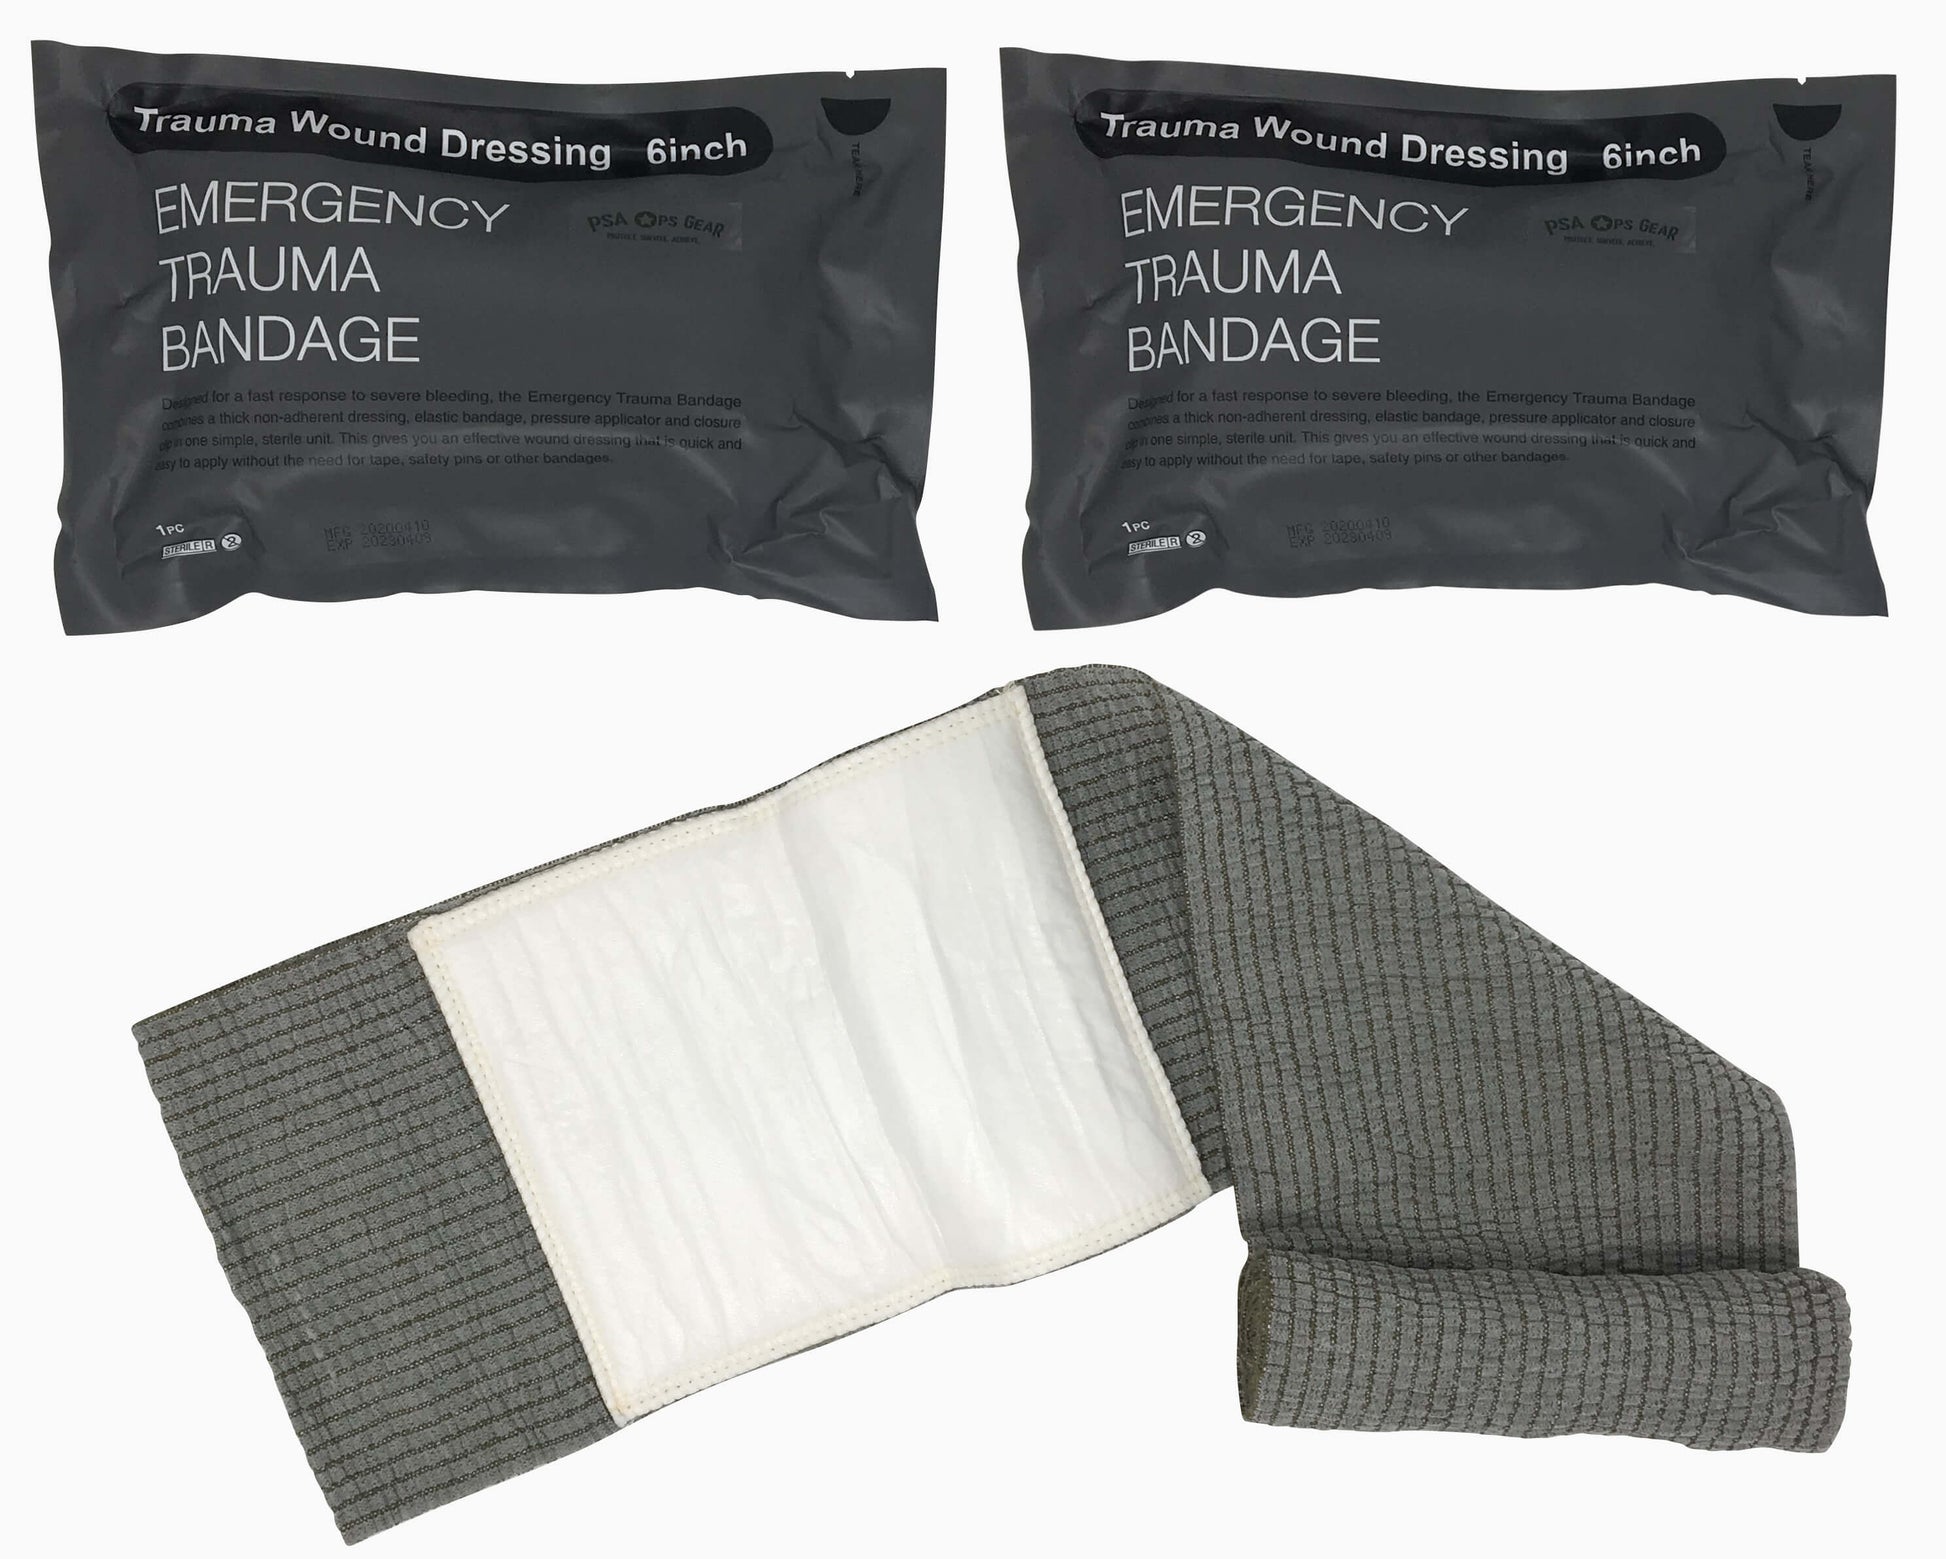 Combat Emergency Bandage – PSA Ops Gear